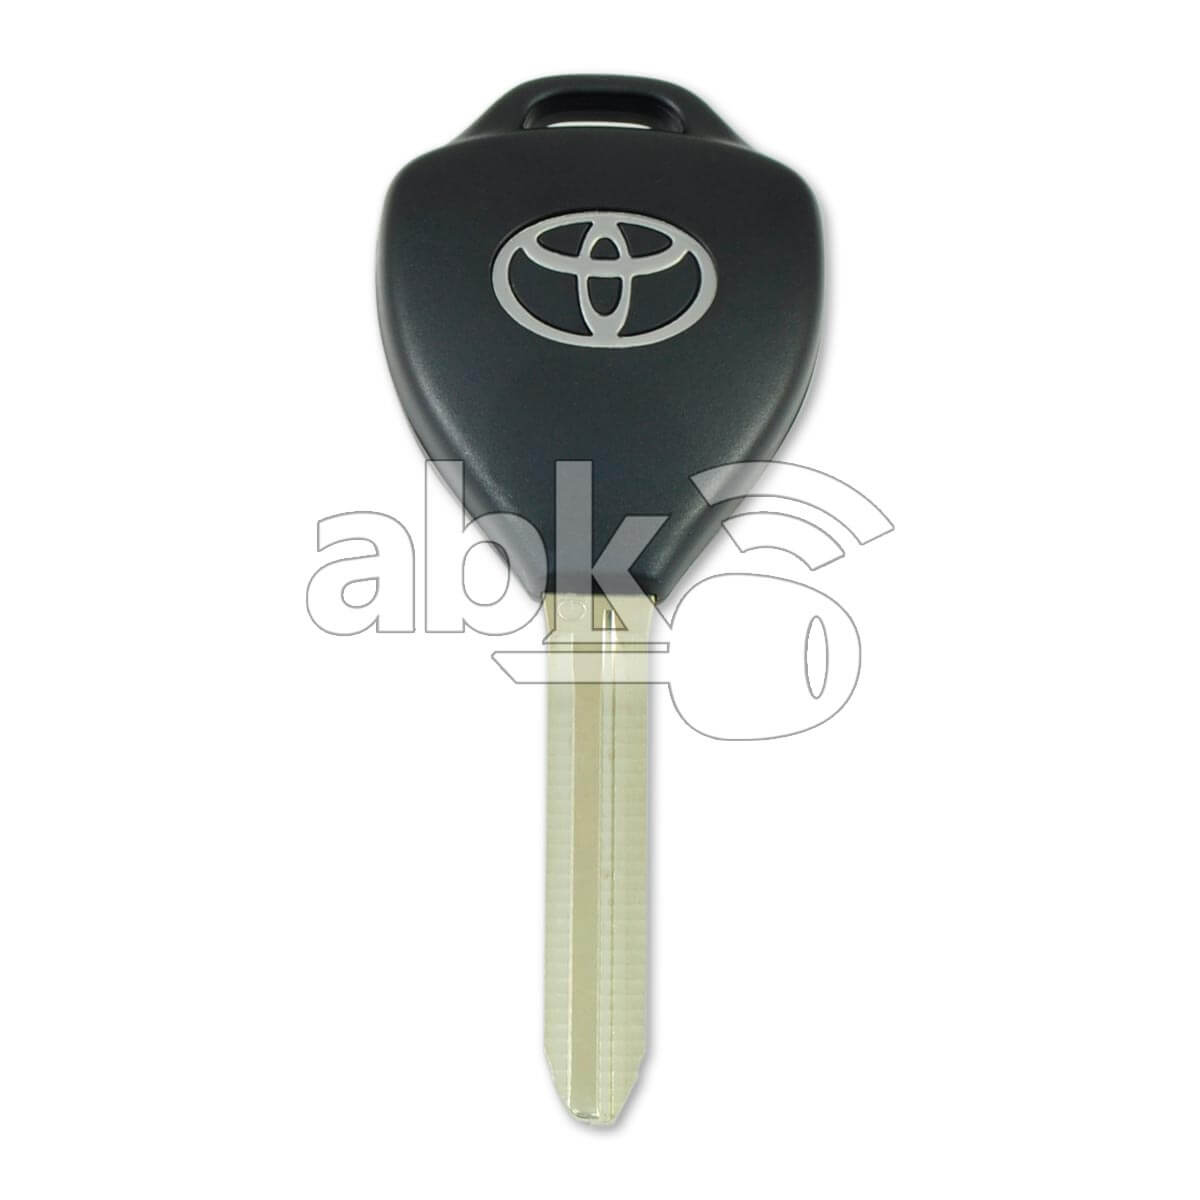 Genuine Toyota Yaris 2007+ Key Head Remote 3Buttons M0ZB41TG 312MHz TOY43 89070-52850 - ABK-2732 - 